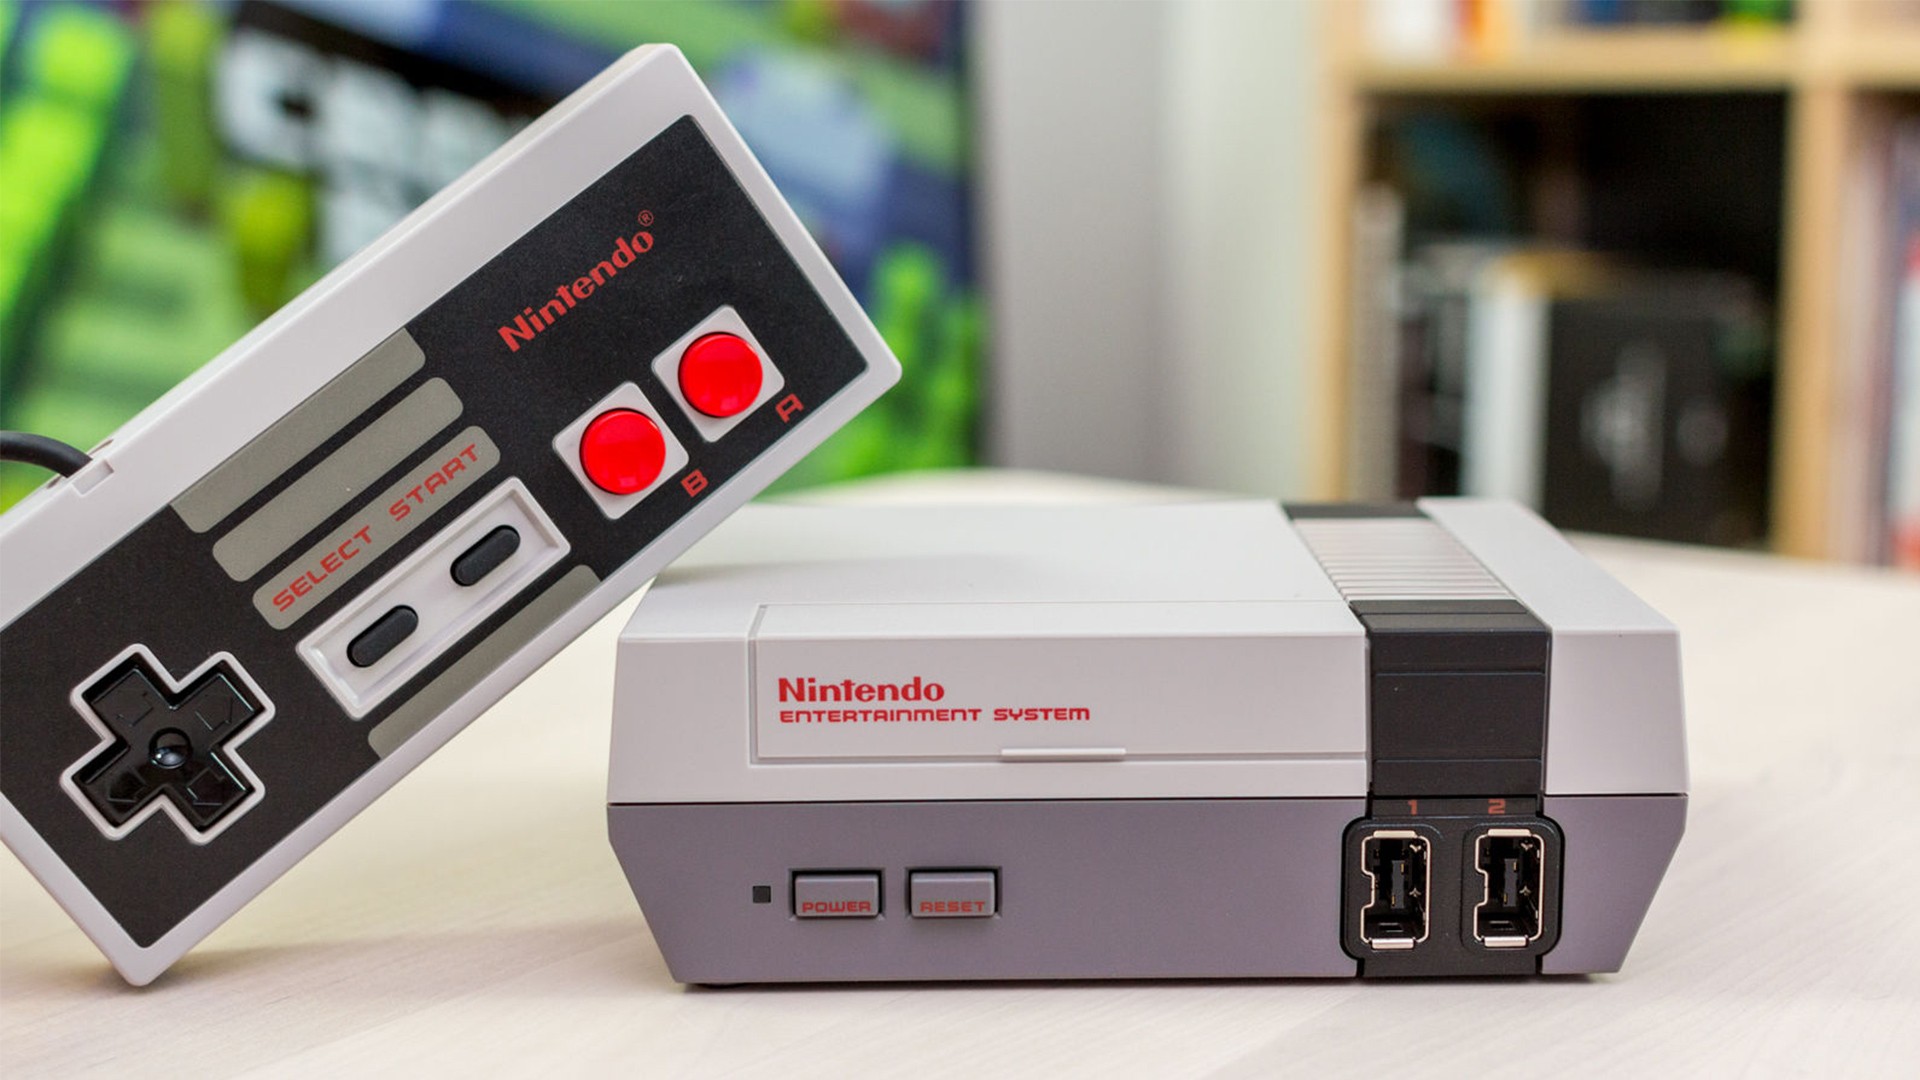 Rcm nintendo. Приставка Нинтендо NES. Нинтендо Старая приставка. Приставка консоль Nintendo NES. Нинтендо консоль Старая.